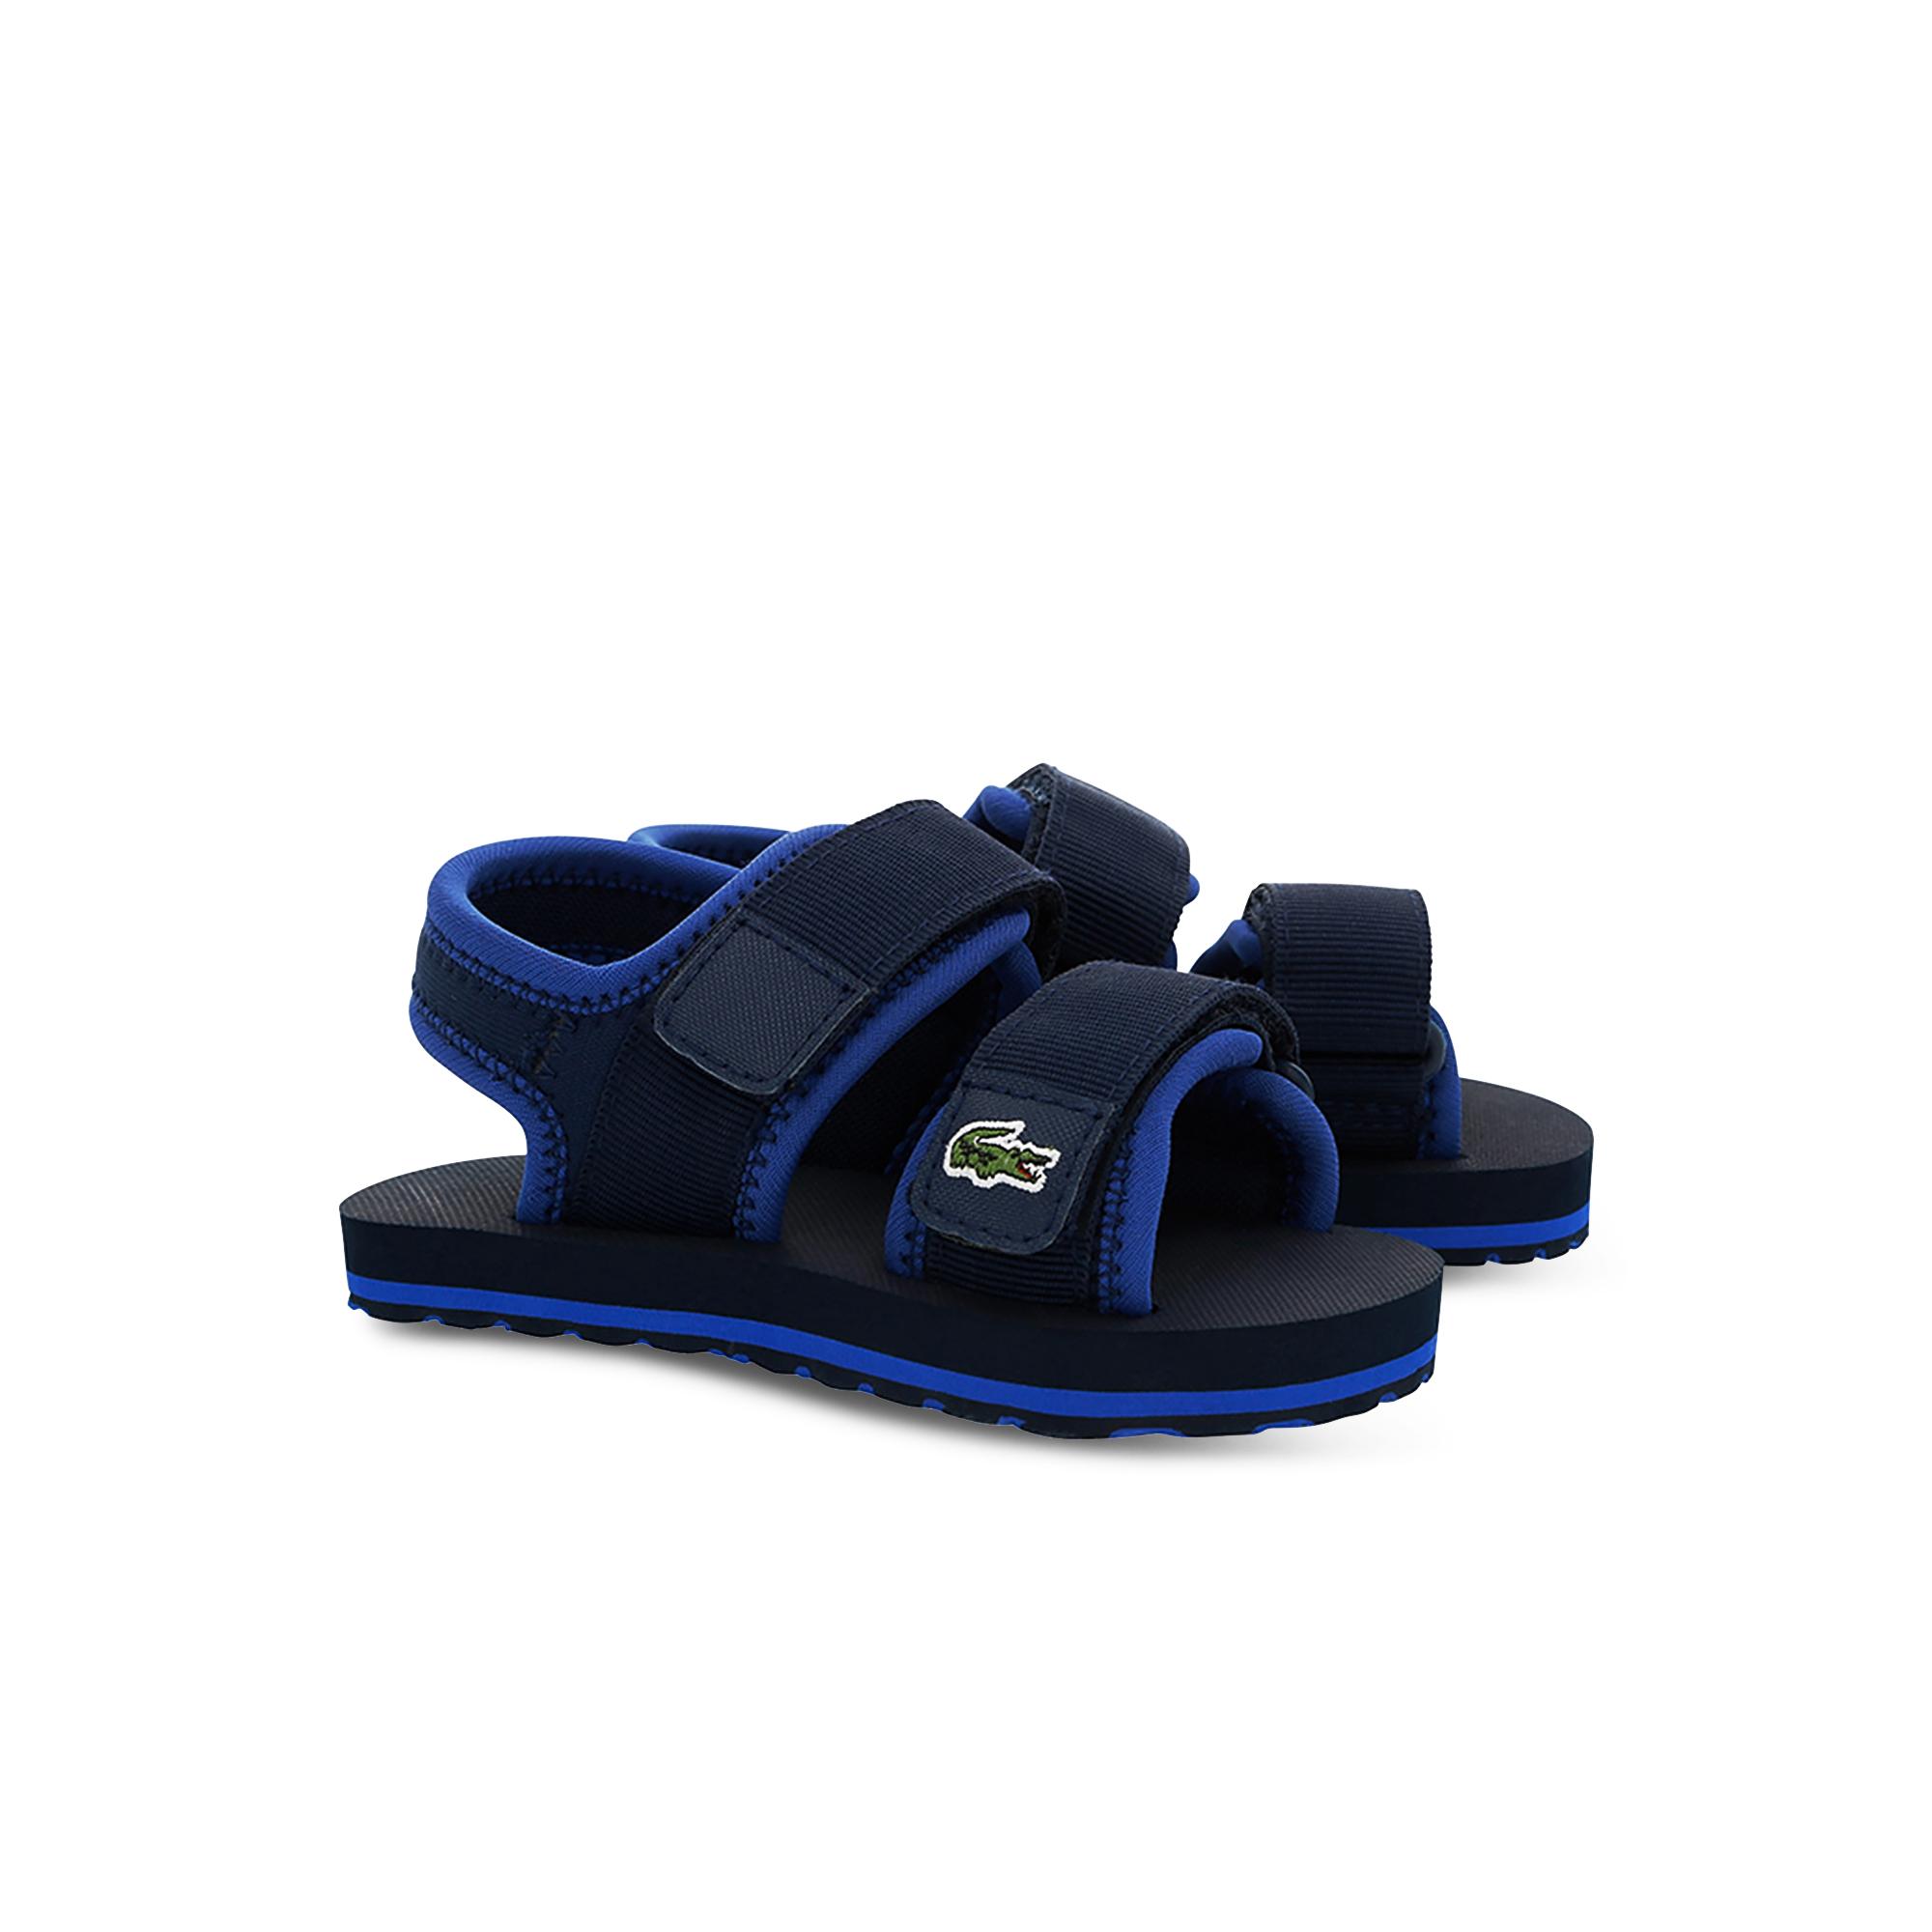 Modalite Net Lacoste Lacoste Cocuk Lacivert Mavi Sol 119 1 Casual Sandalet